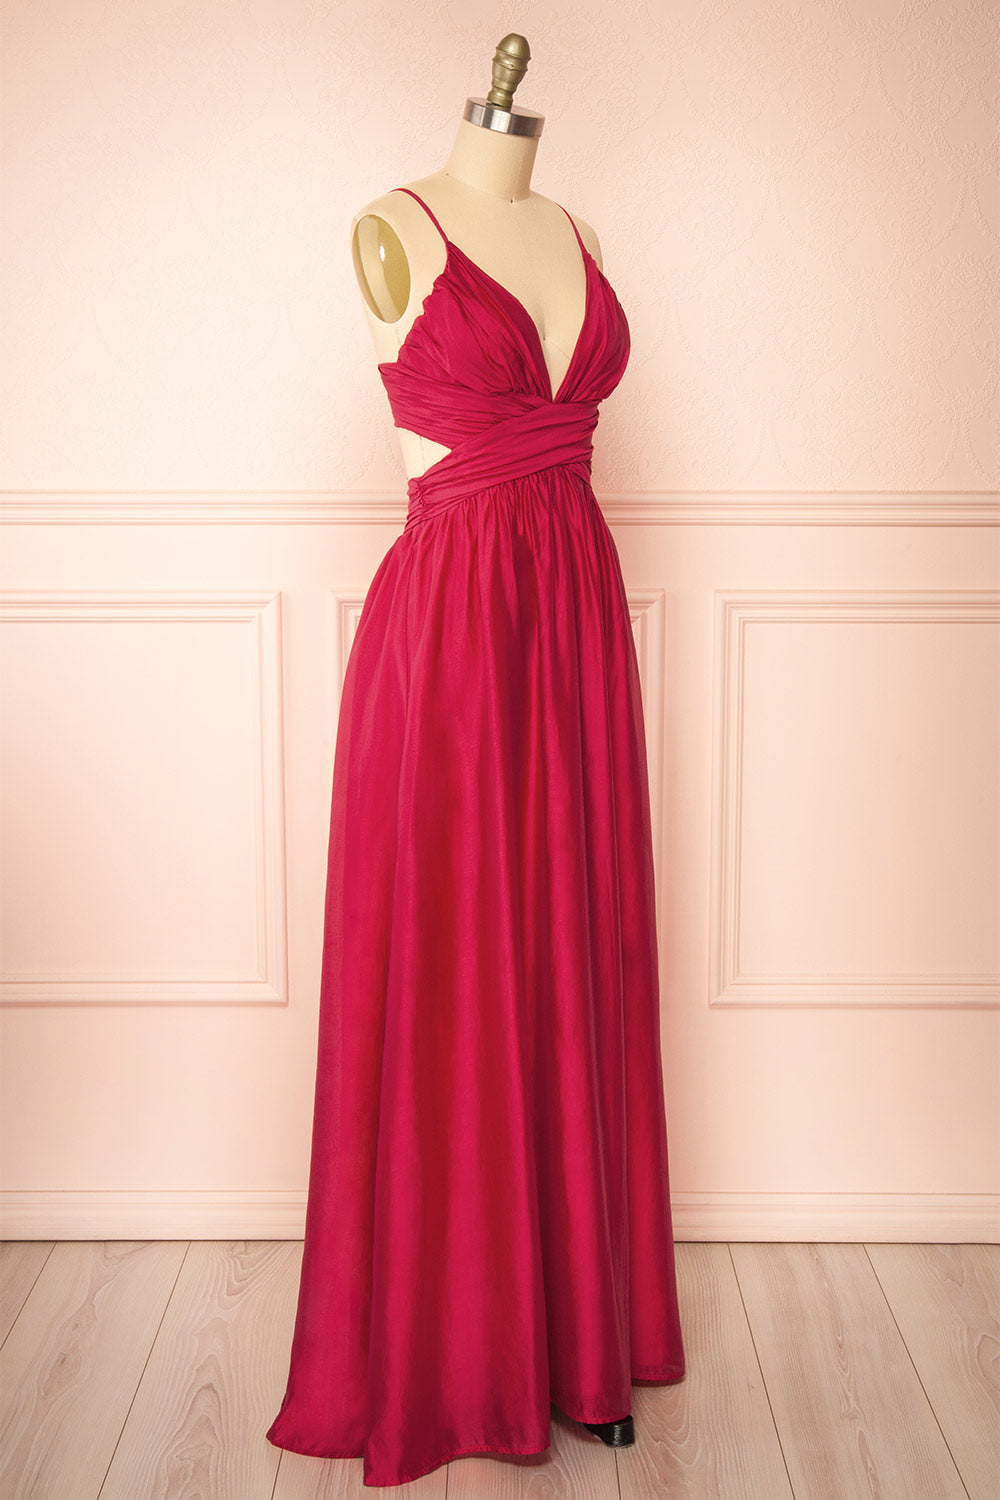 Tallua Long Magenta Dress w/ Plunging Neckline | Boutique 1861 side view